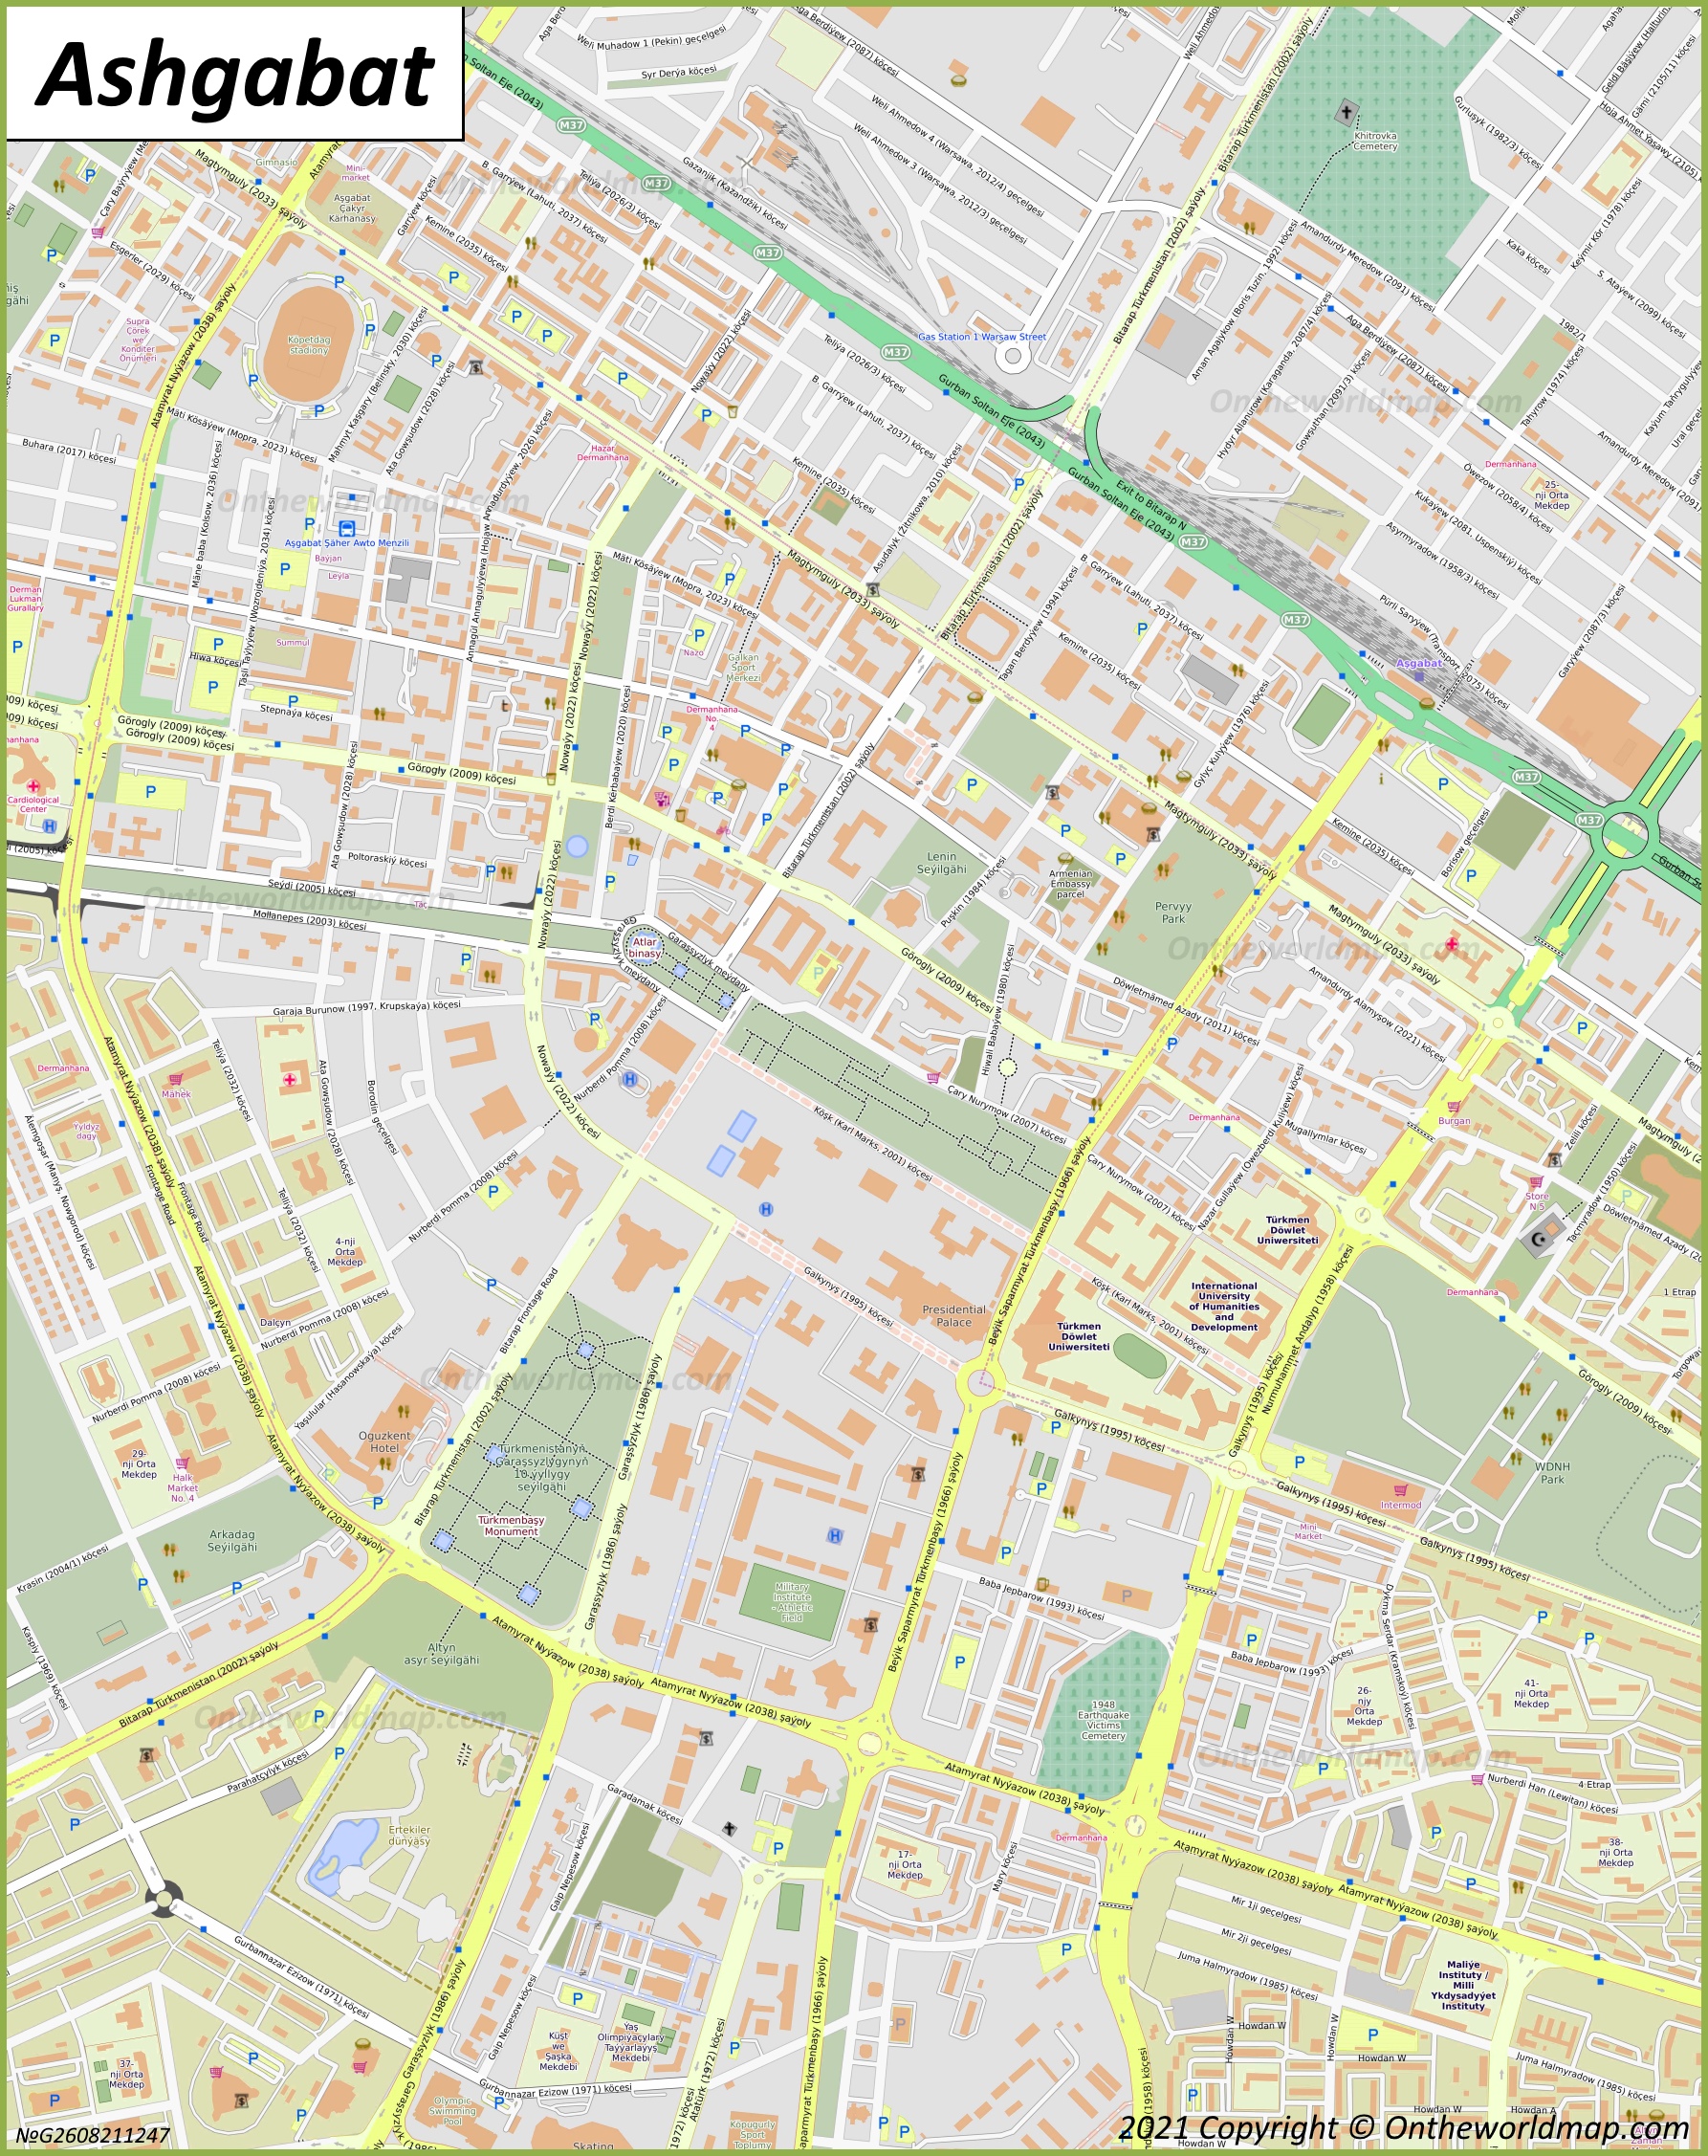 Ashgabat City Center Map